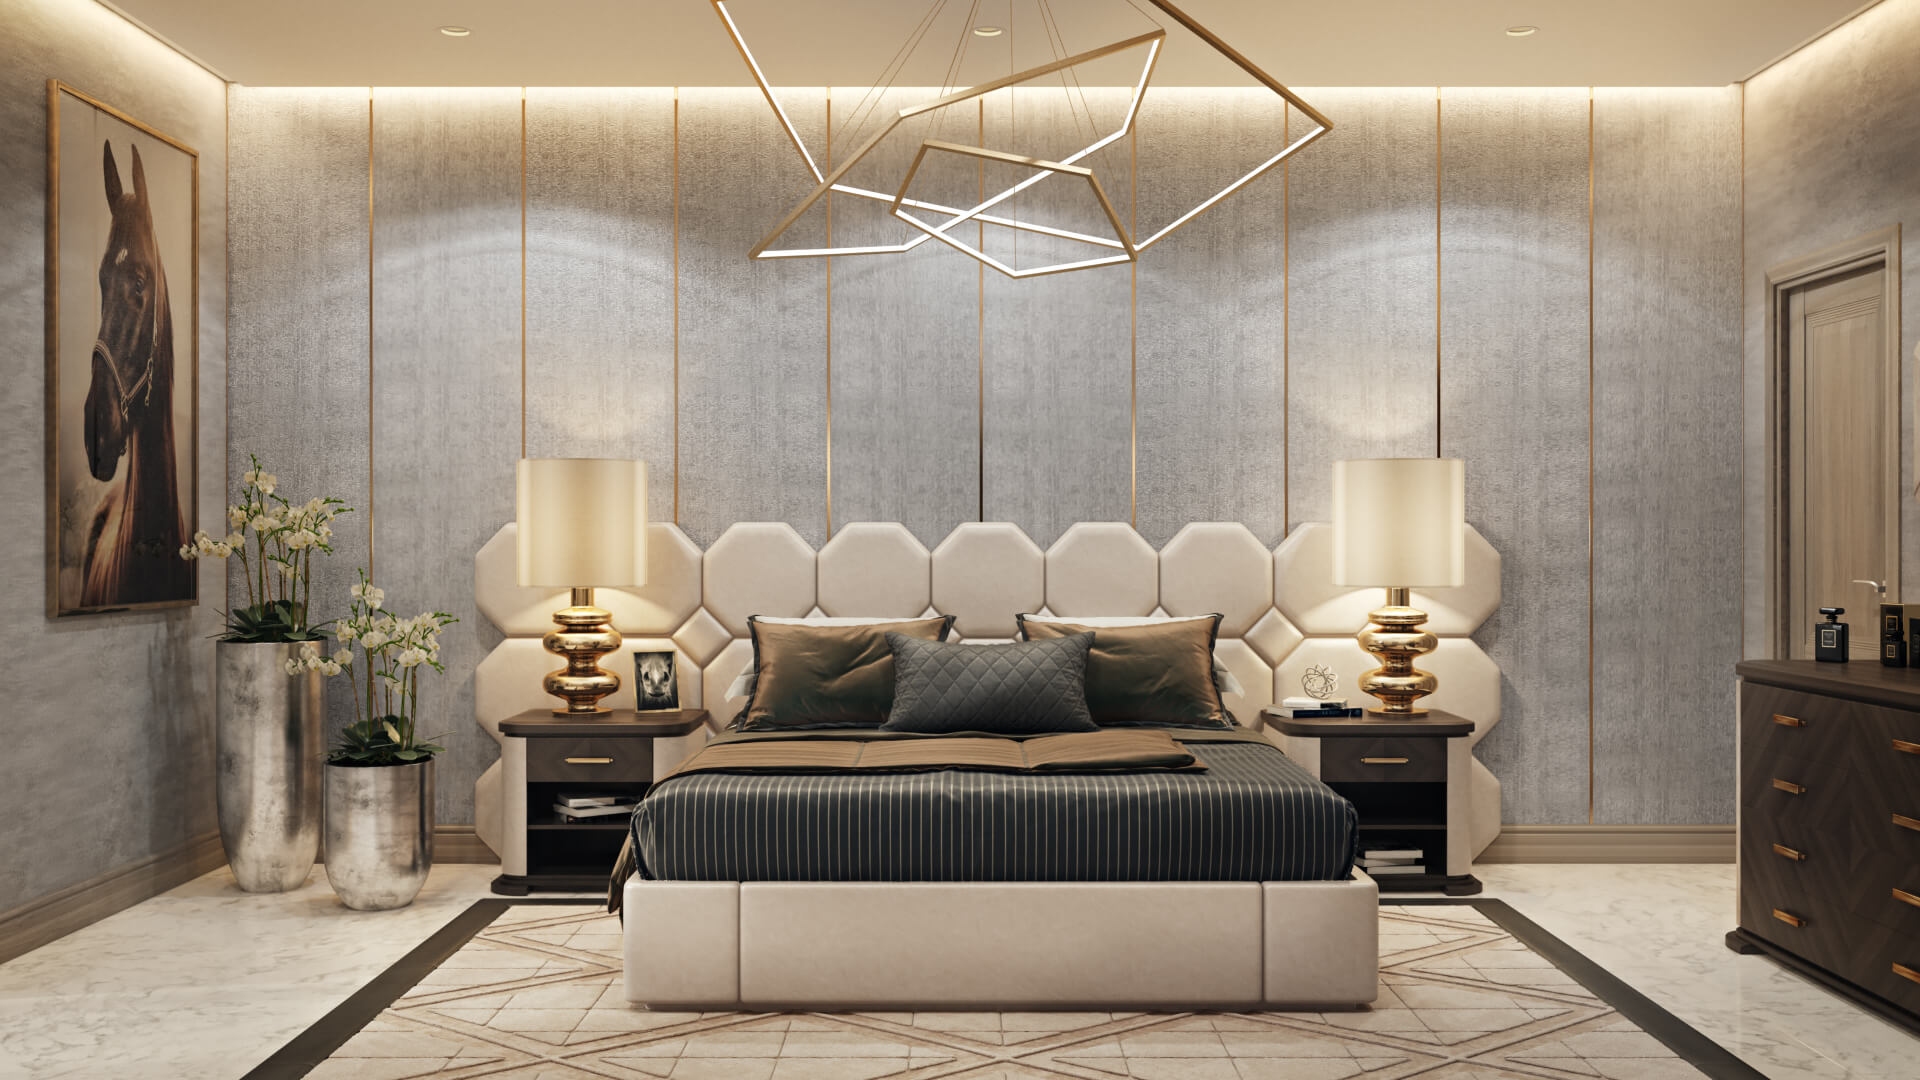 CG Image of an Elegant Hotel Room